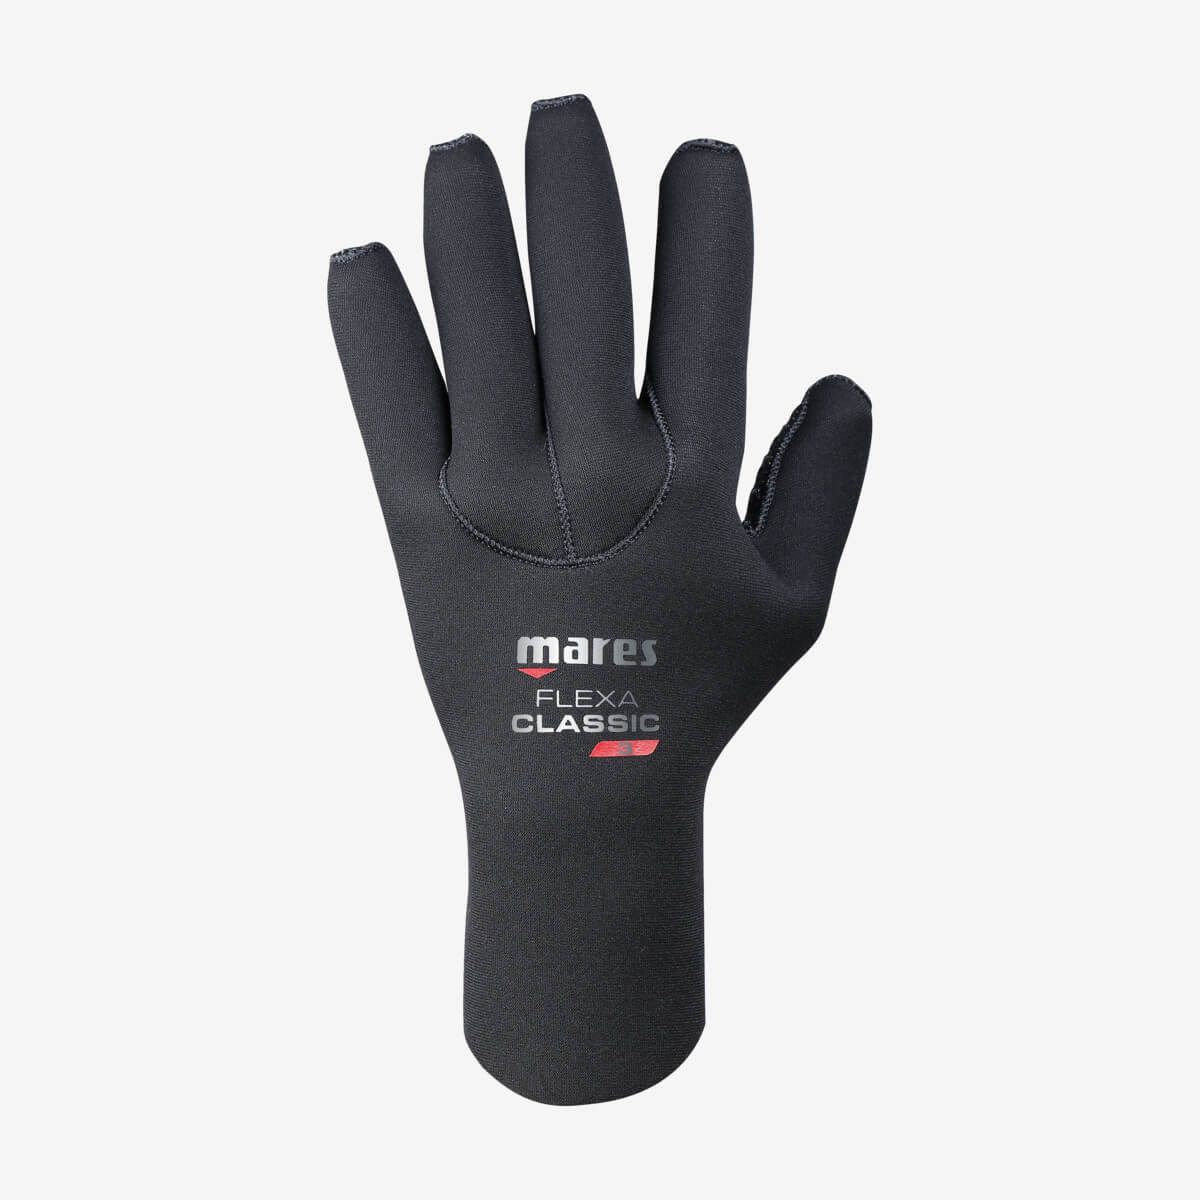 Mares Flexa Classic 3mm Gloves